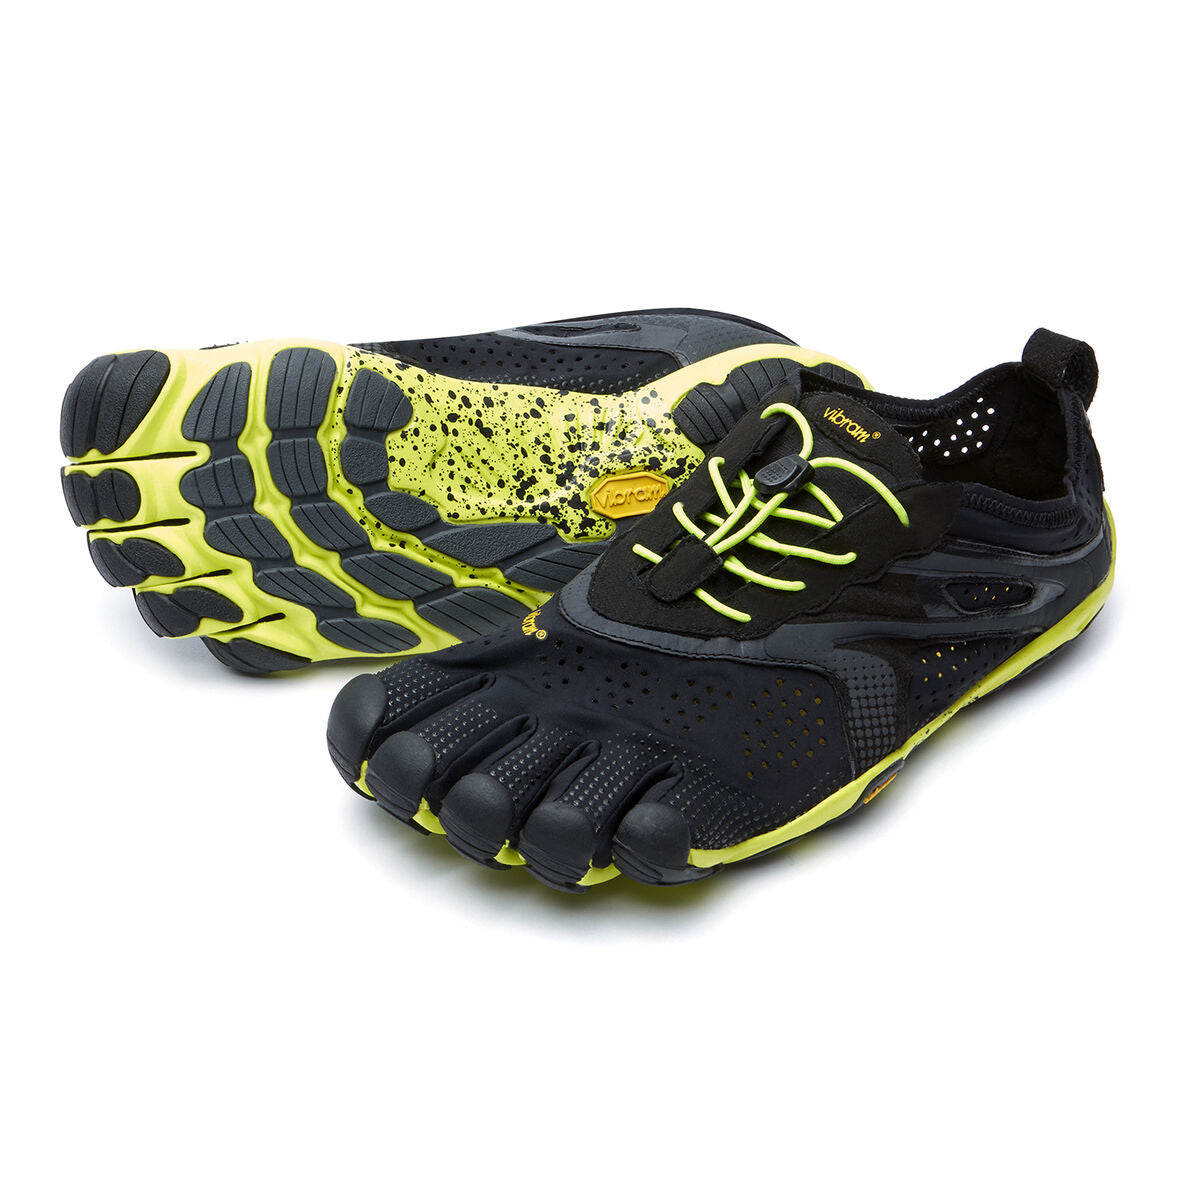 Men's Vibram Five Fingers V-Run Running Shoe in Black/Yellow from the front